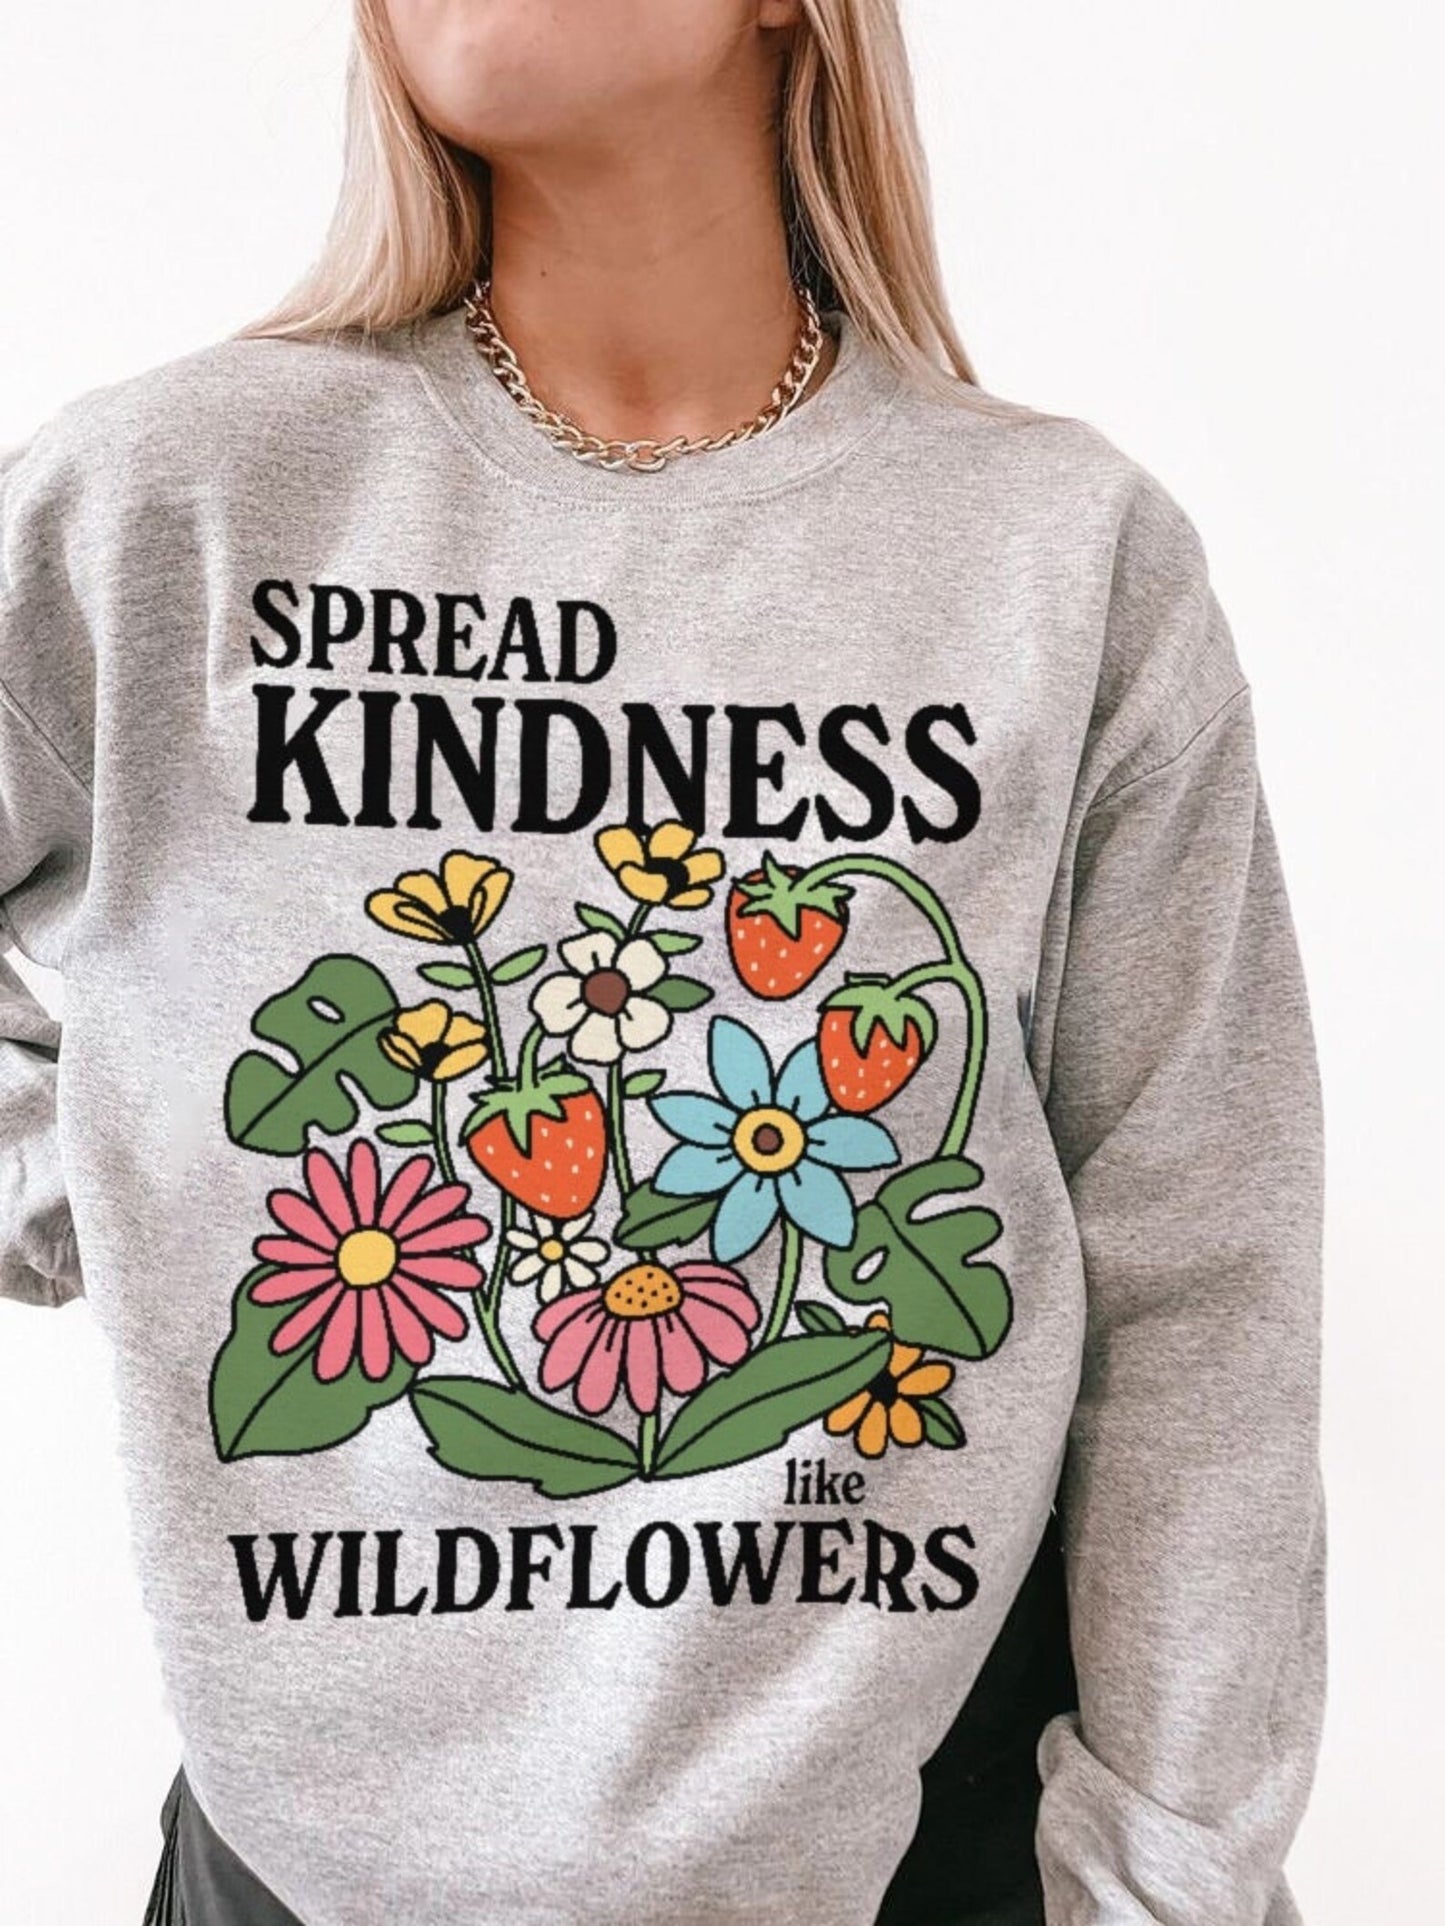 'Spread Kindness like wildflowers' Sweatshirt